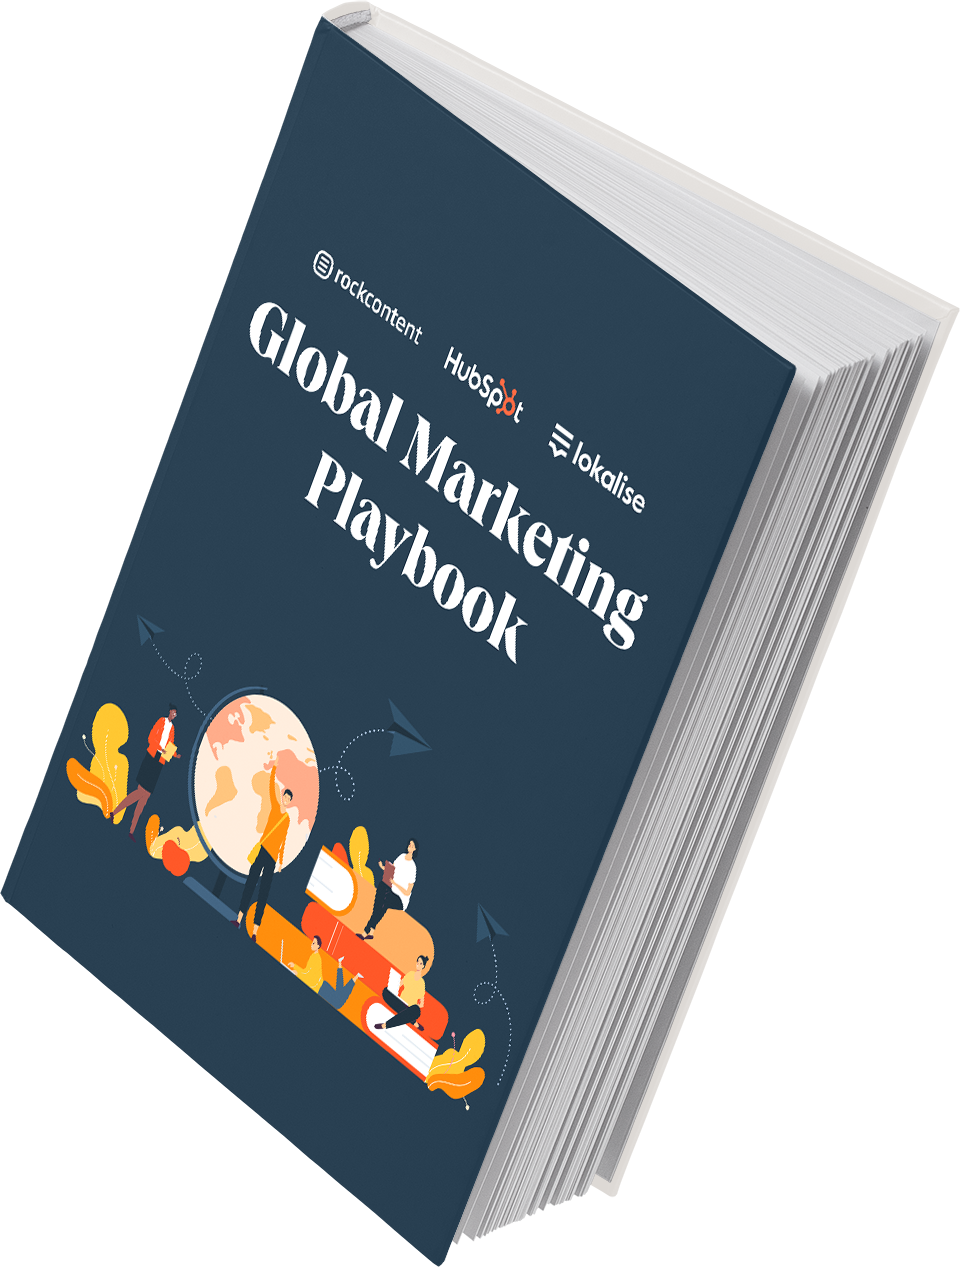 01_Global Marketing Playbook